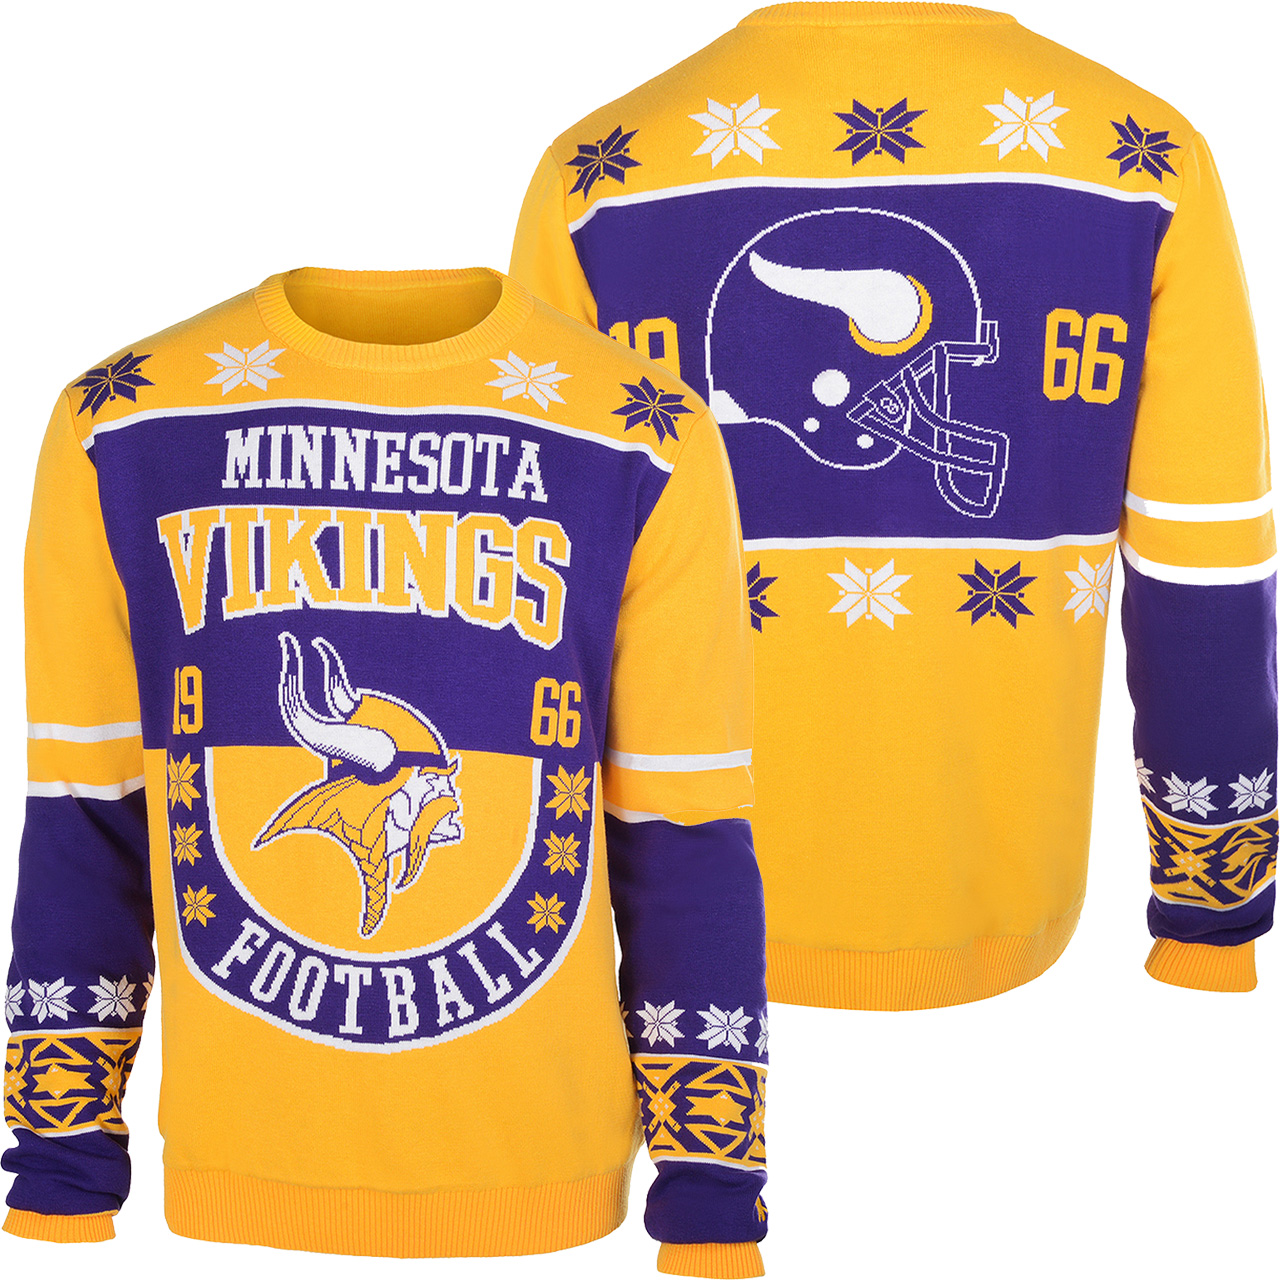 Minnesota Vikings NFL Retro Cotton Sweater